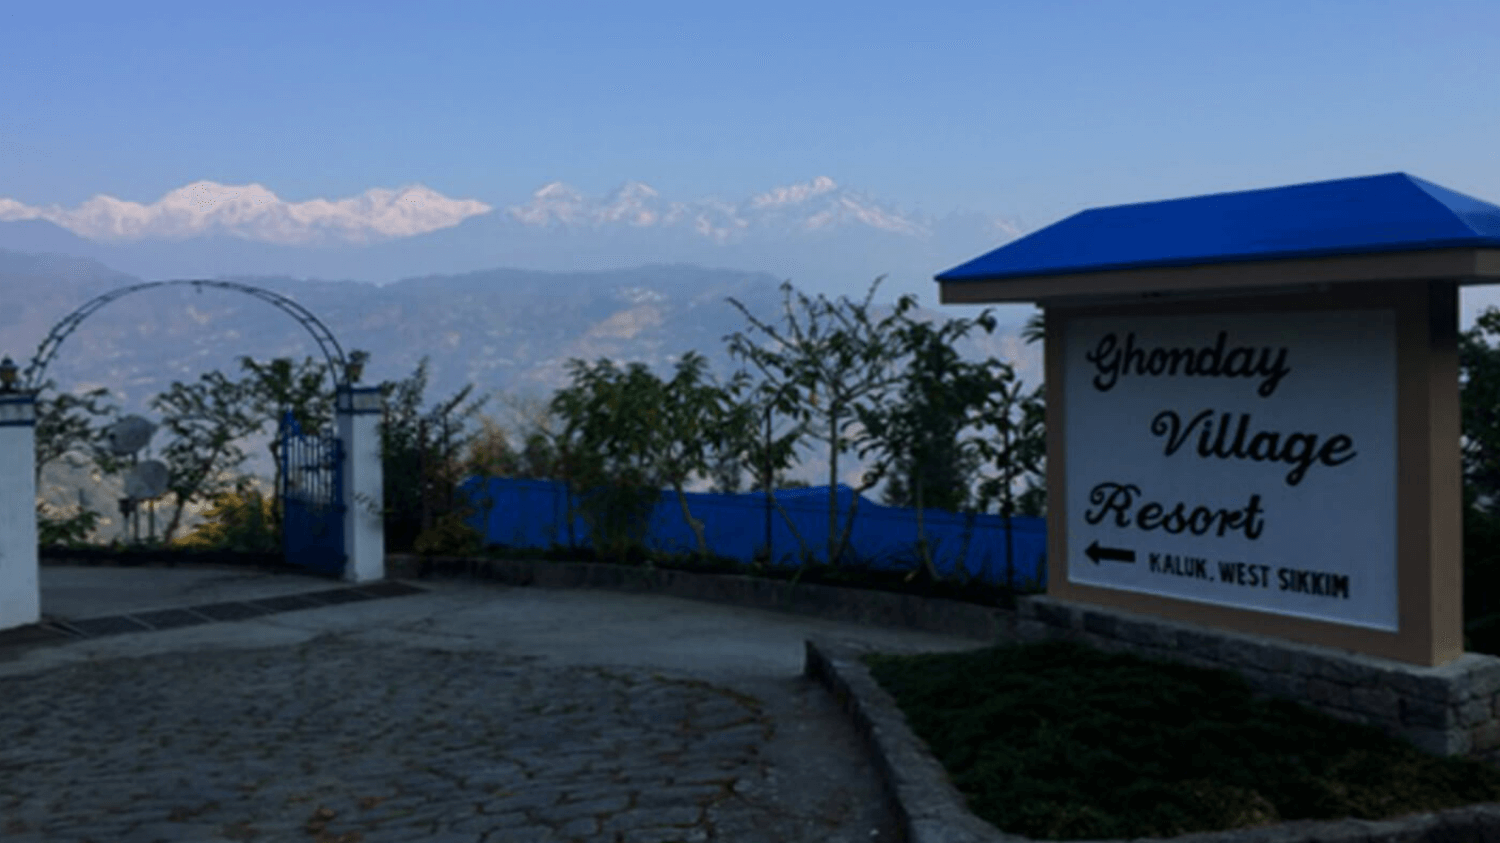 Ghonday Village Resort, Hee-Bermiok, Sikkim, India